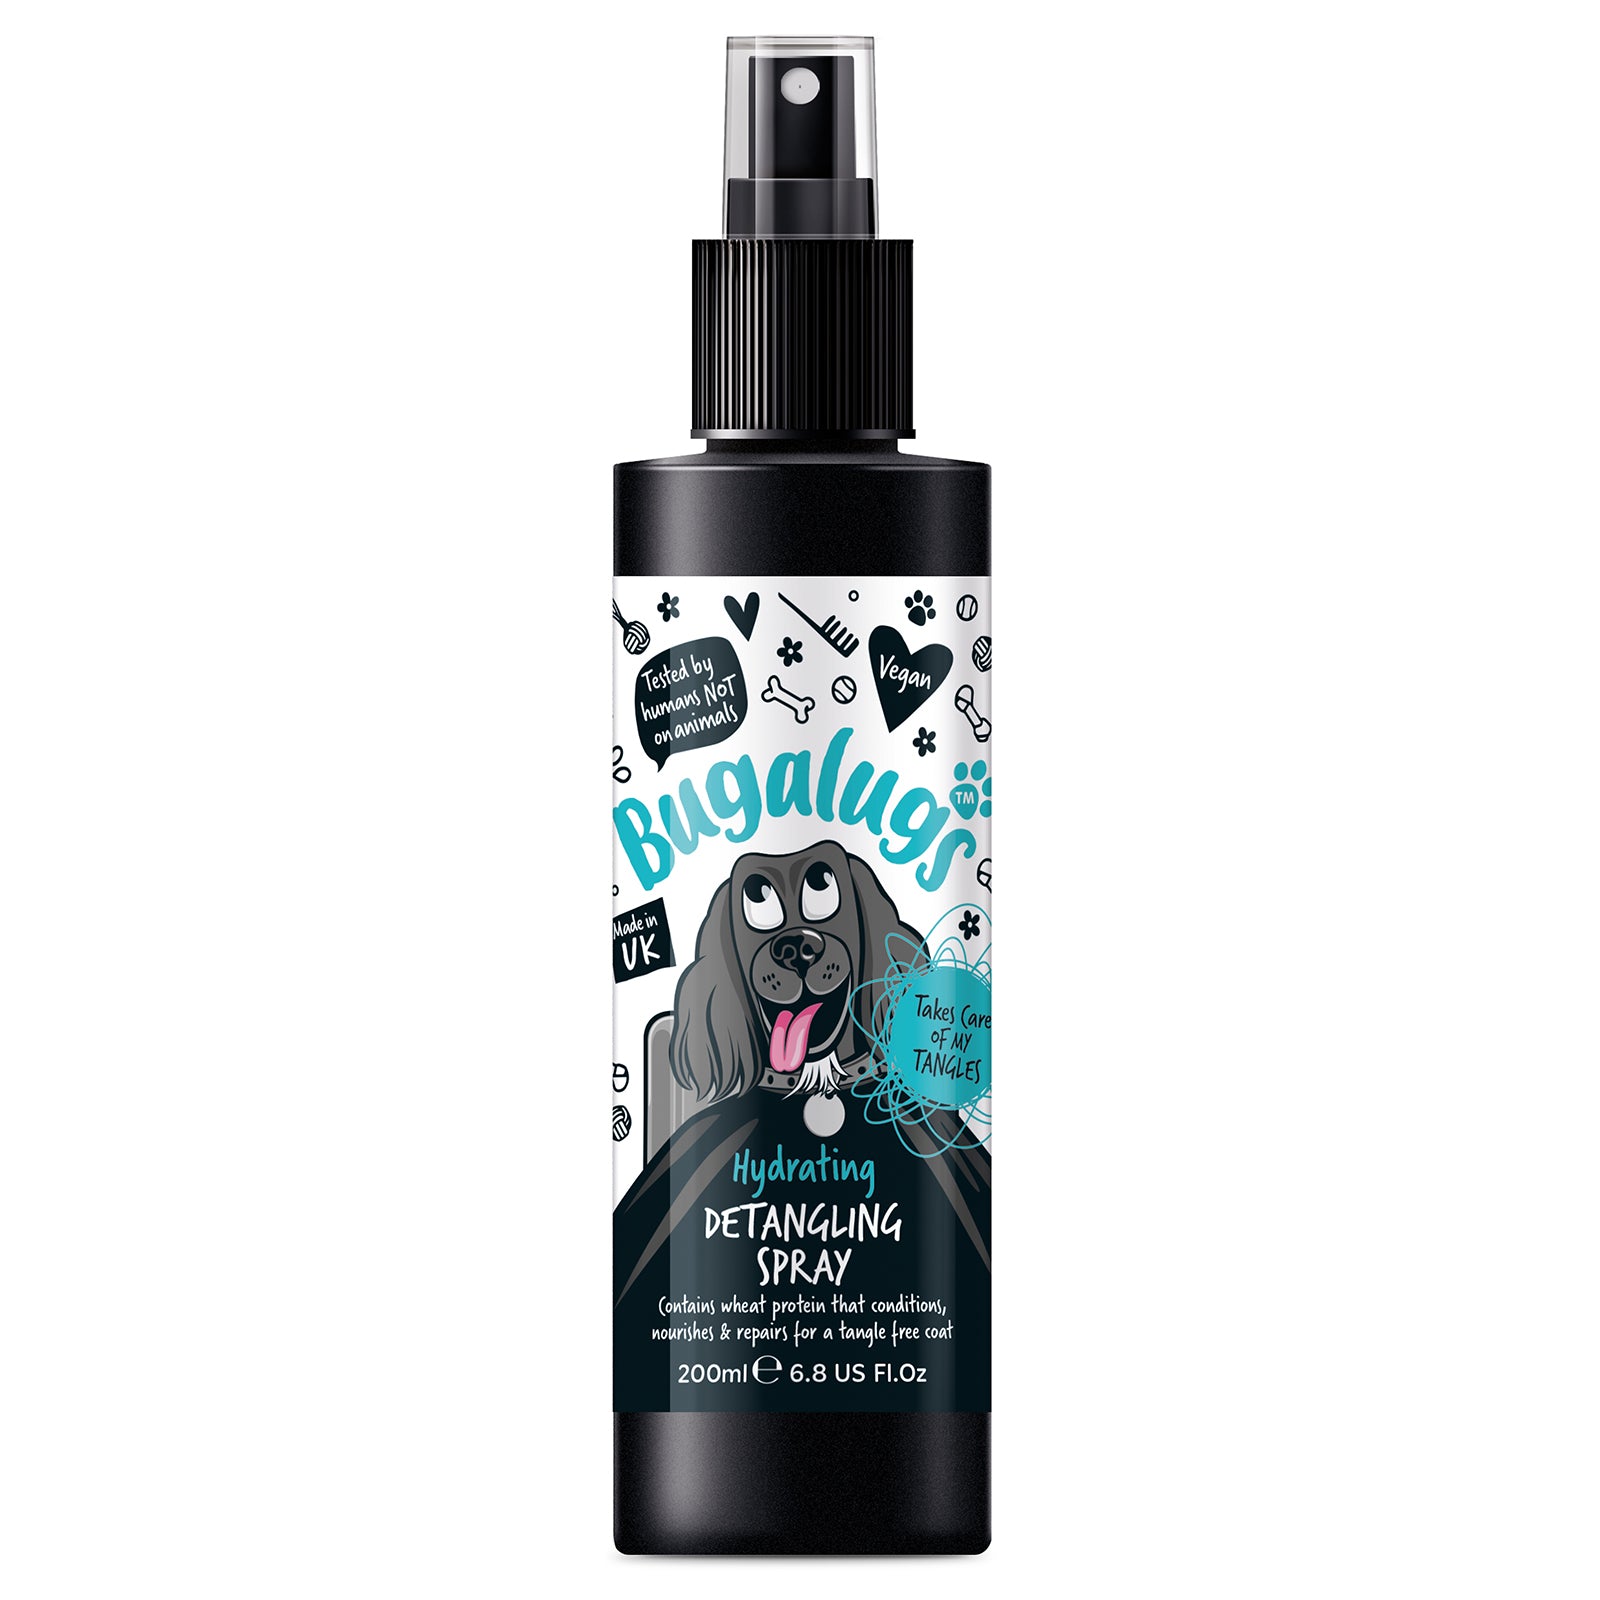 Bugalugs Detangle Grooming Dog Spray 200ml